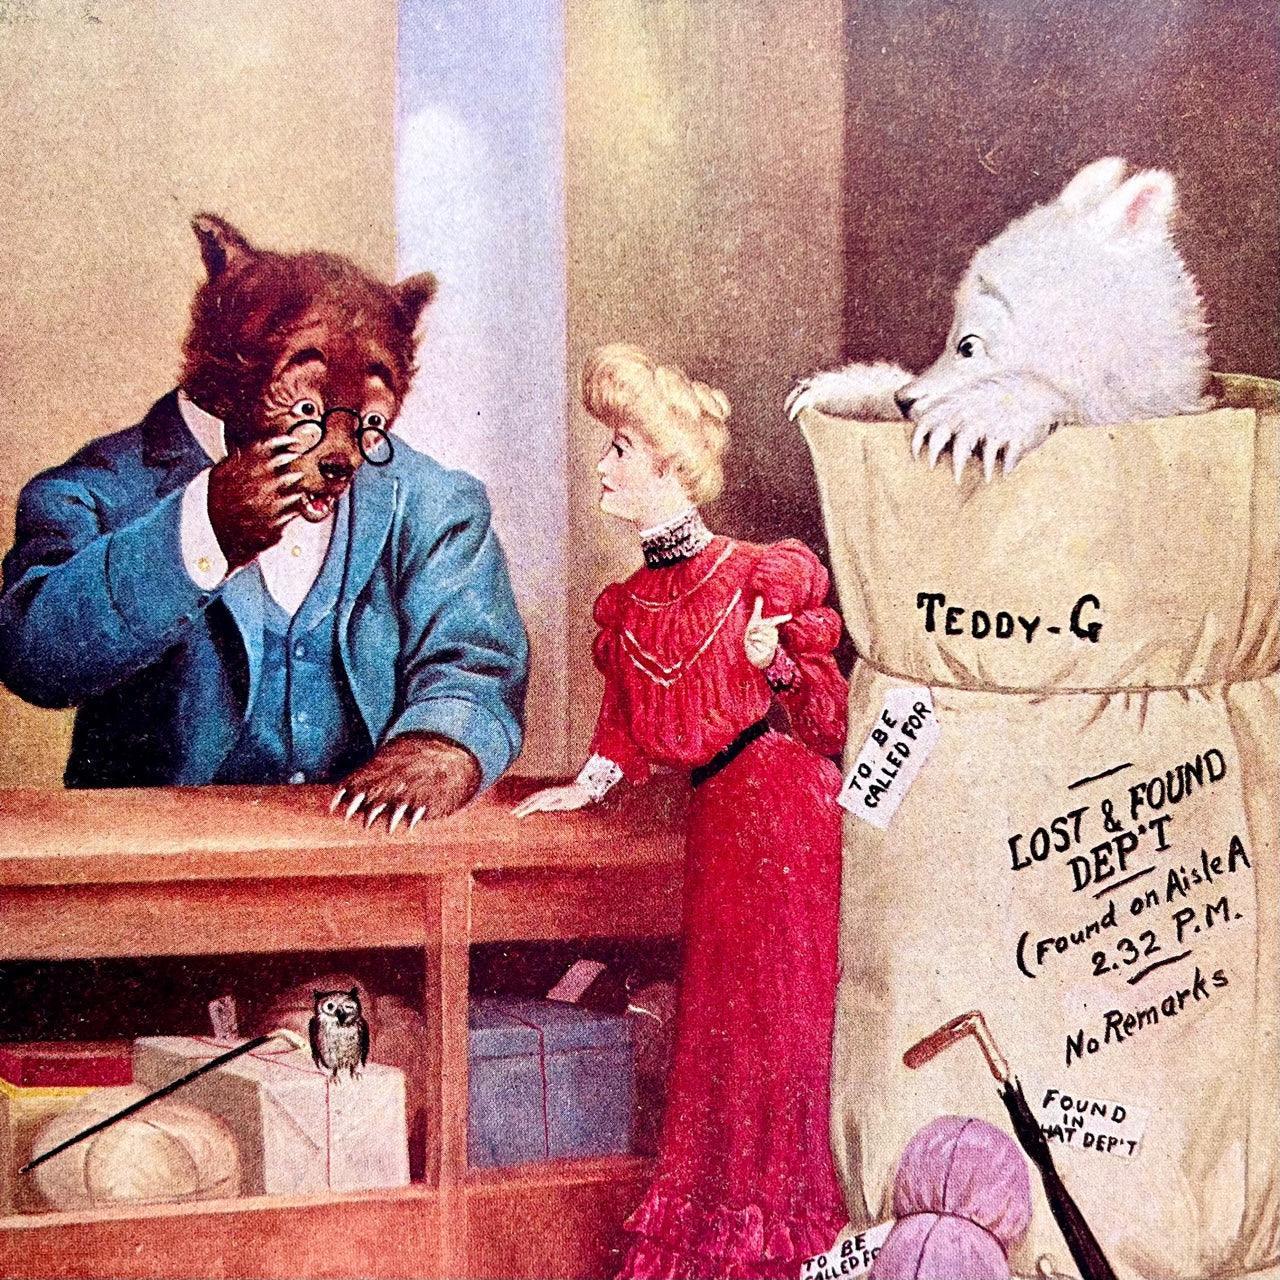 The Roosevelt "Teddy Bears" - Set of 5 original illustrations (1906) - Grinning Cat Books - ART - ARTWORK